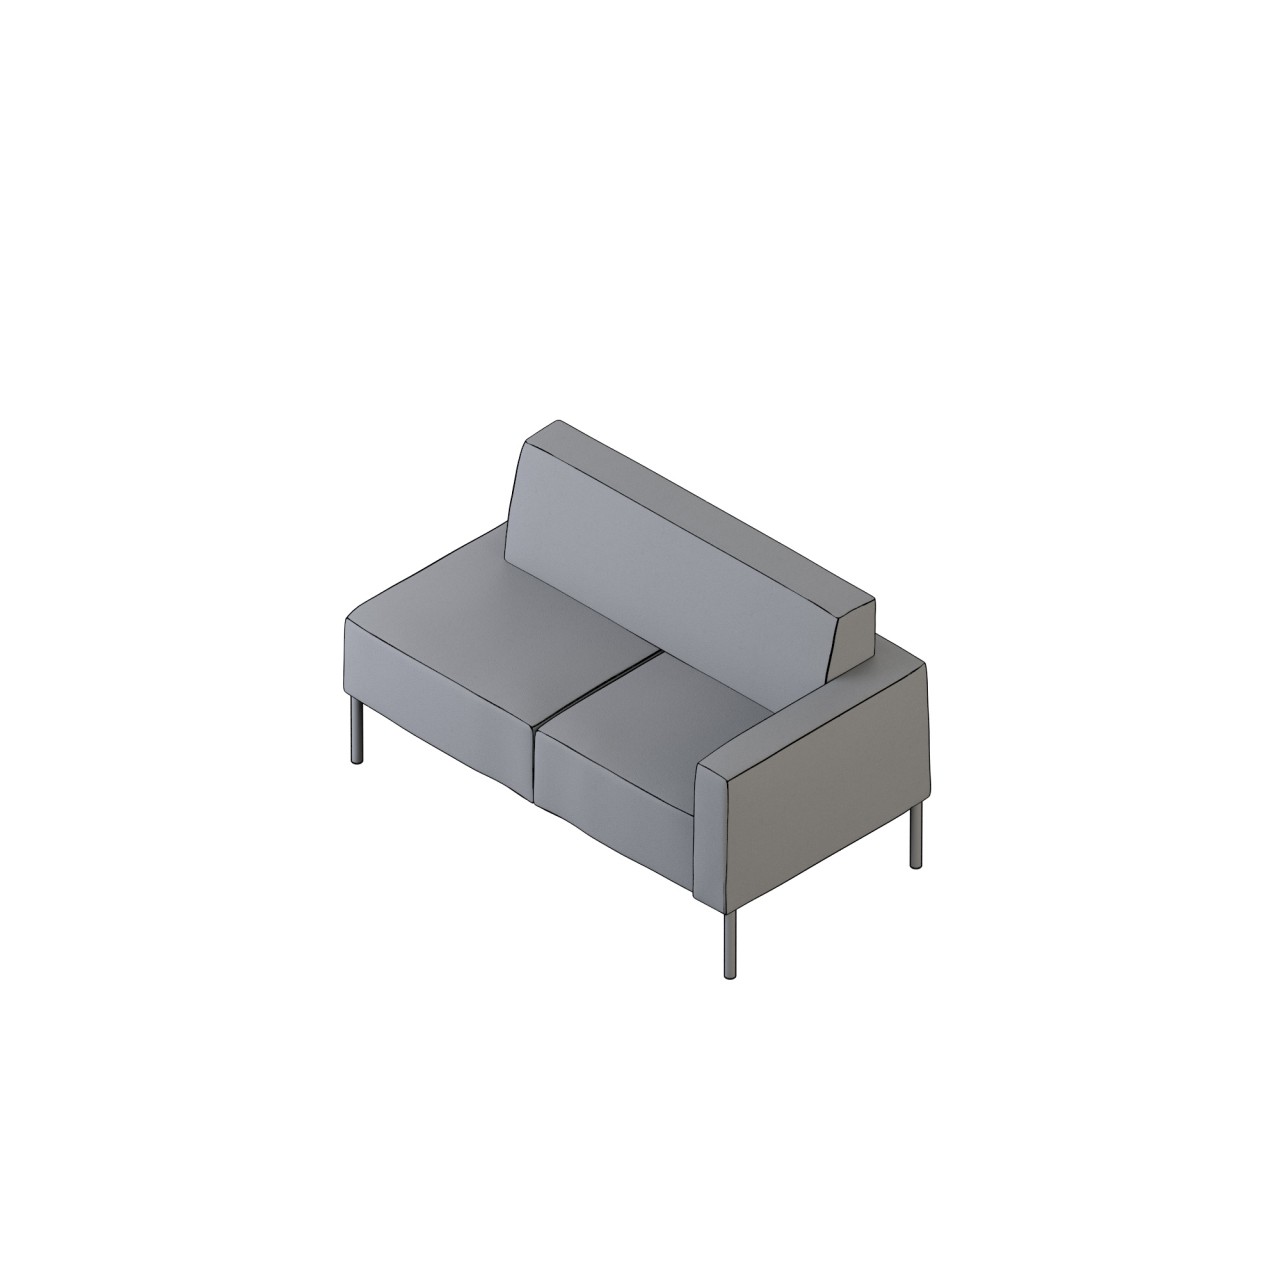 mozzo lounge/modular - 62018L
COM 7.5 COL 150